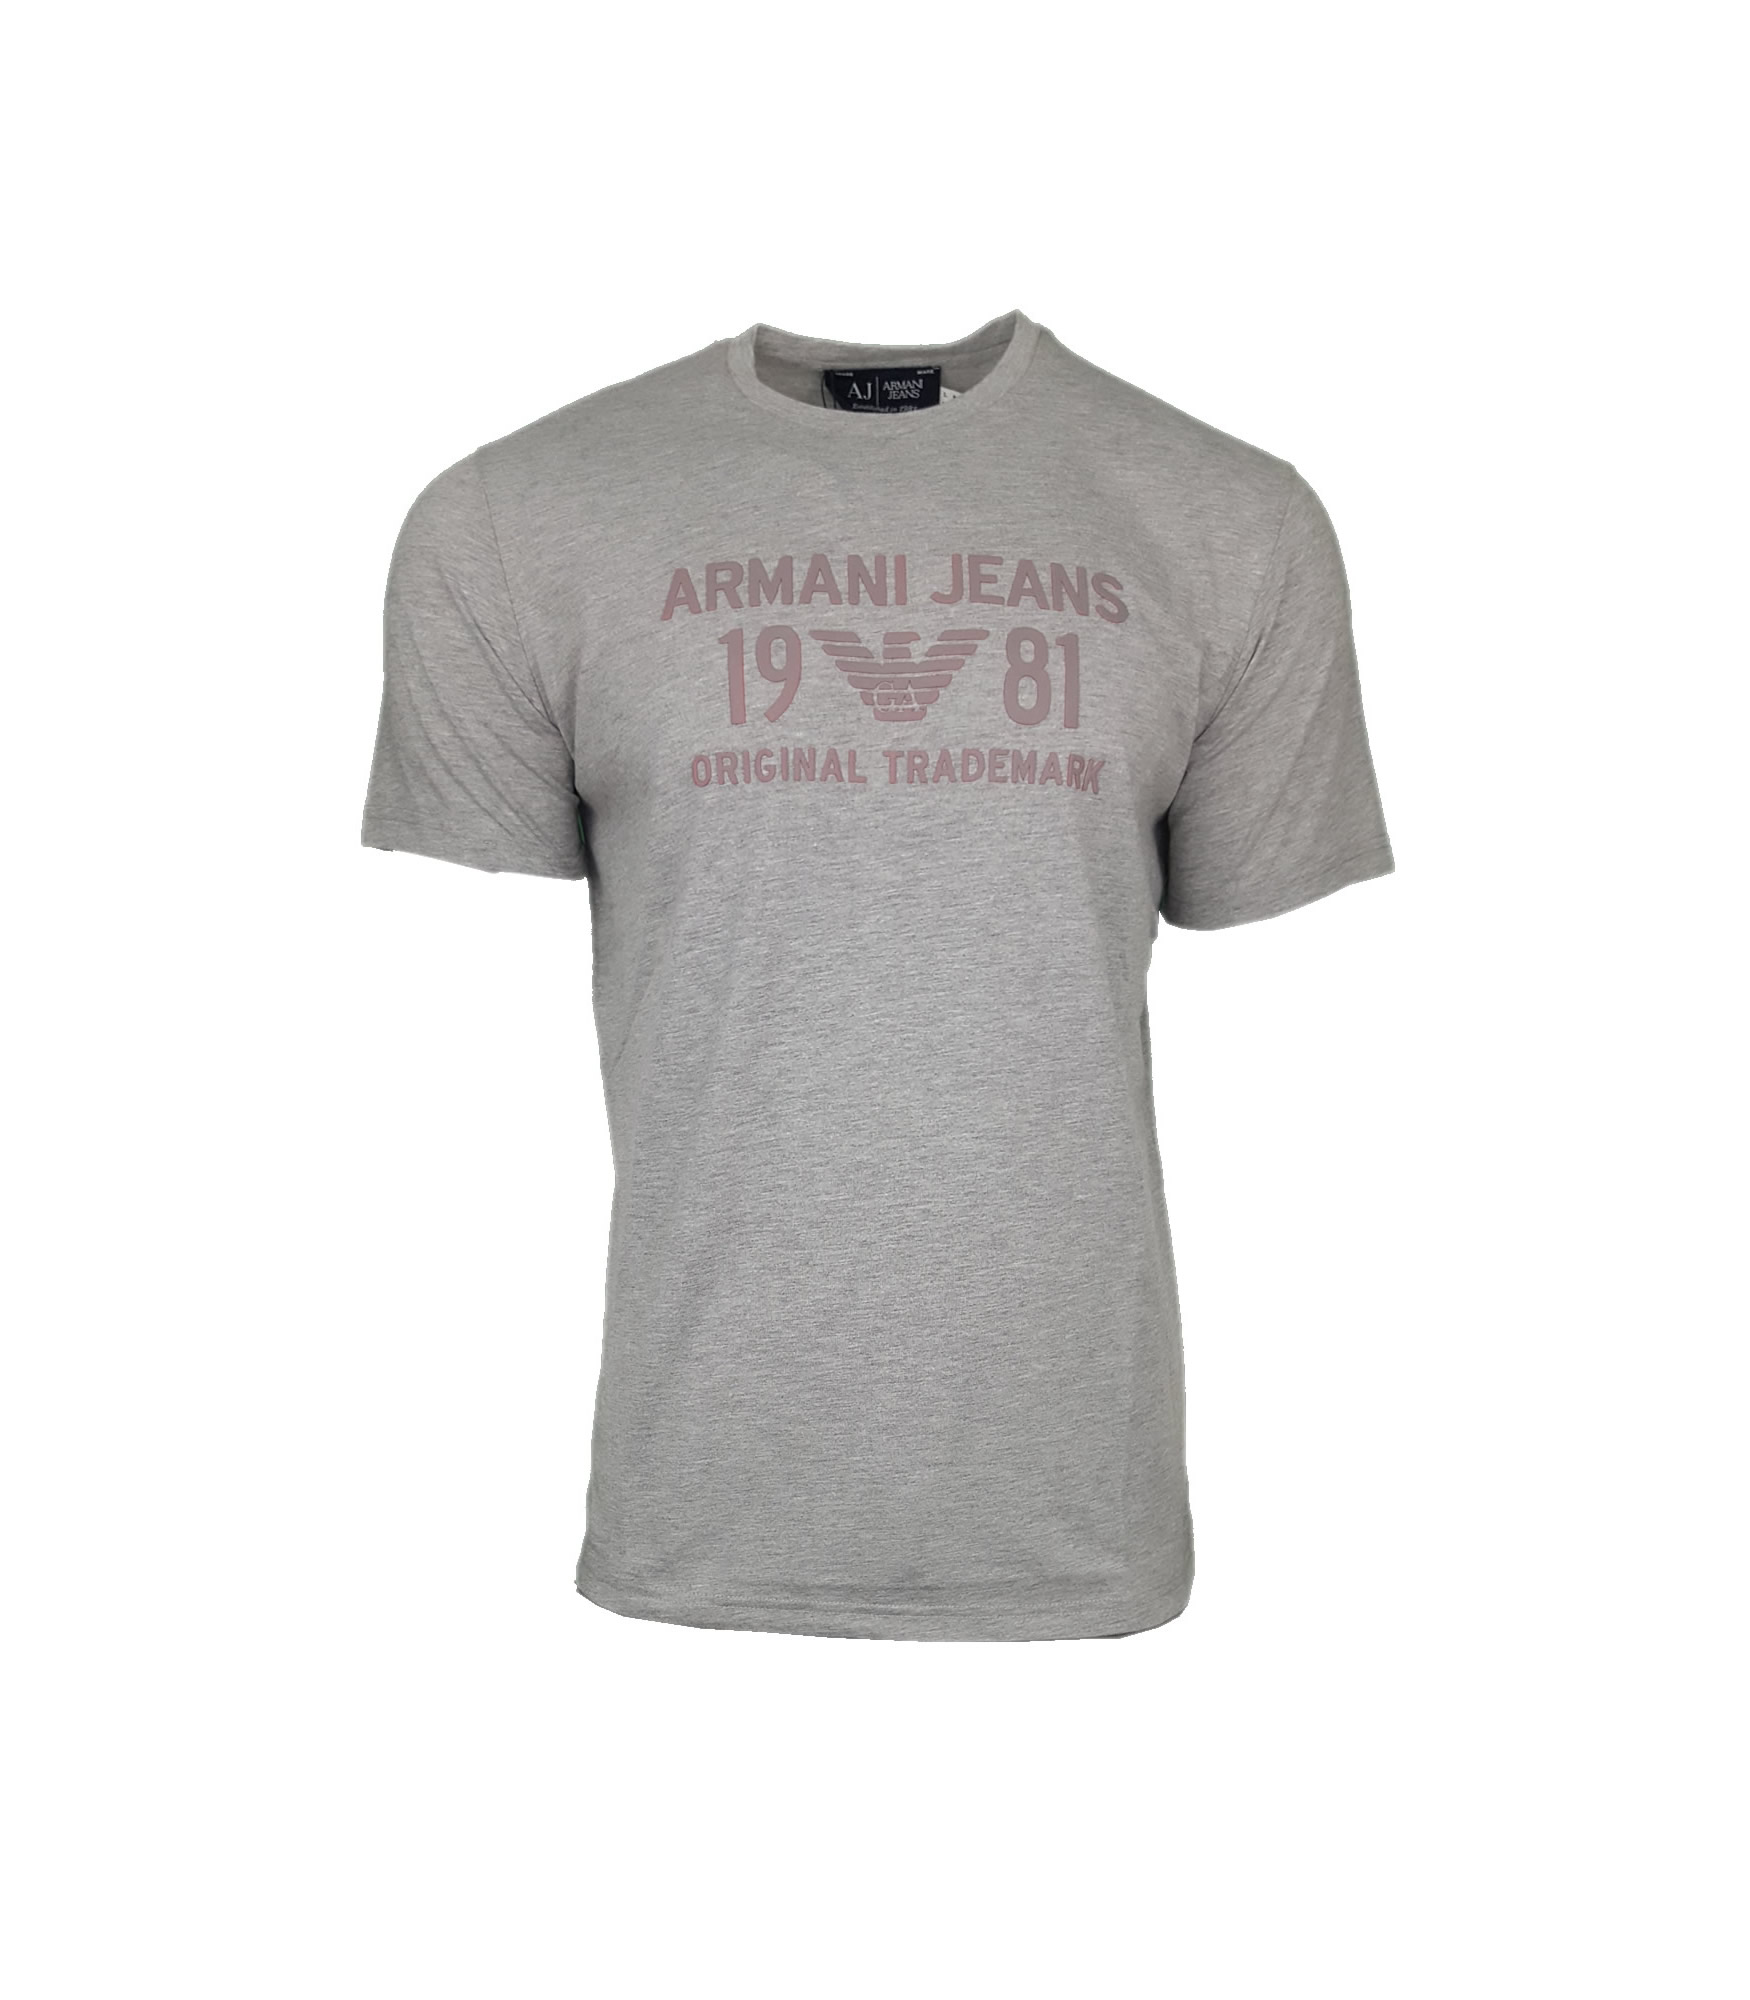 armani 1981 t shirt - 58% OFF 